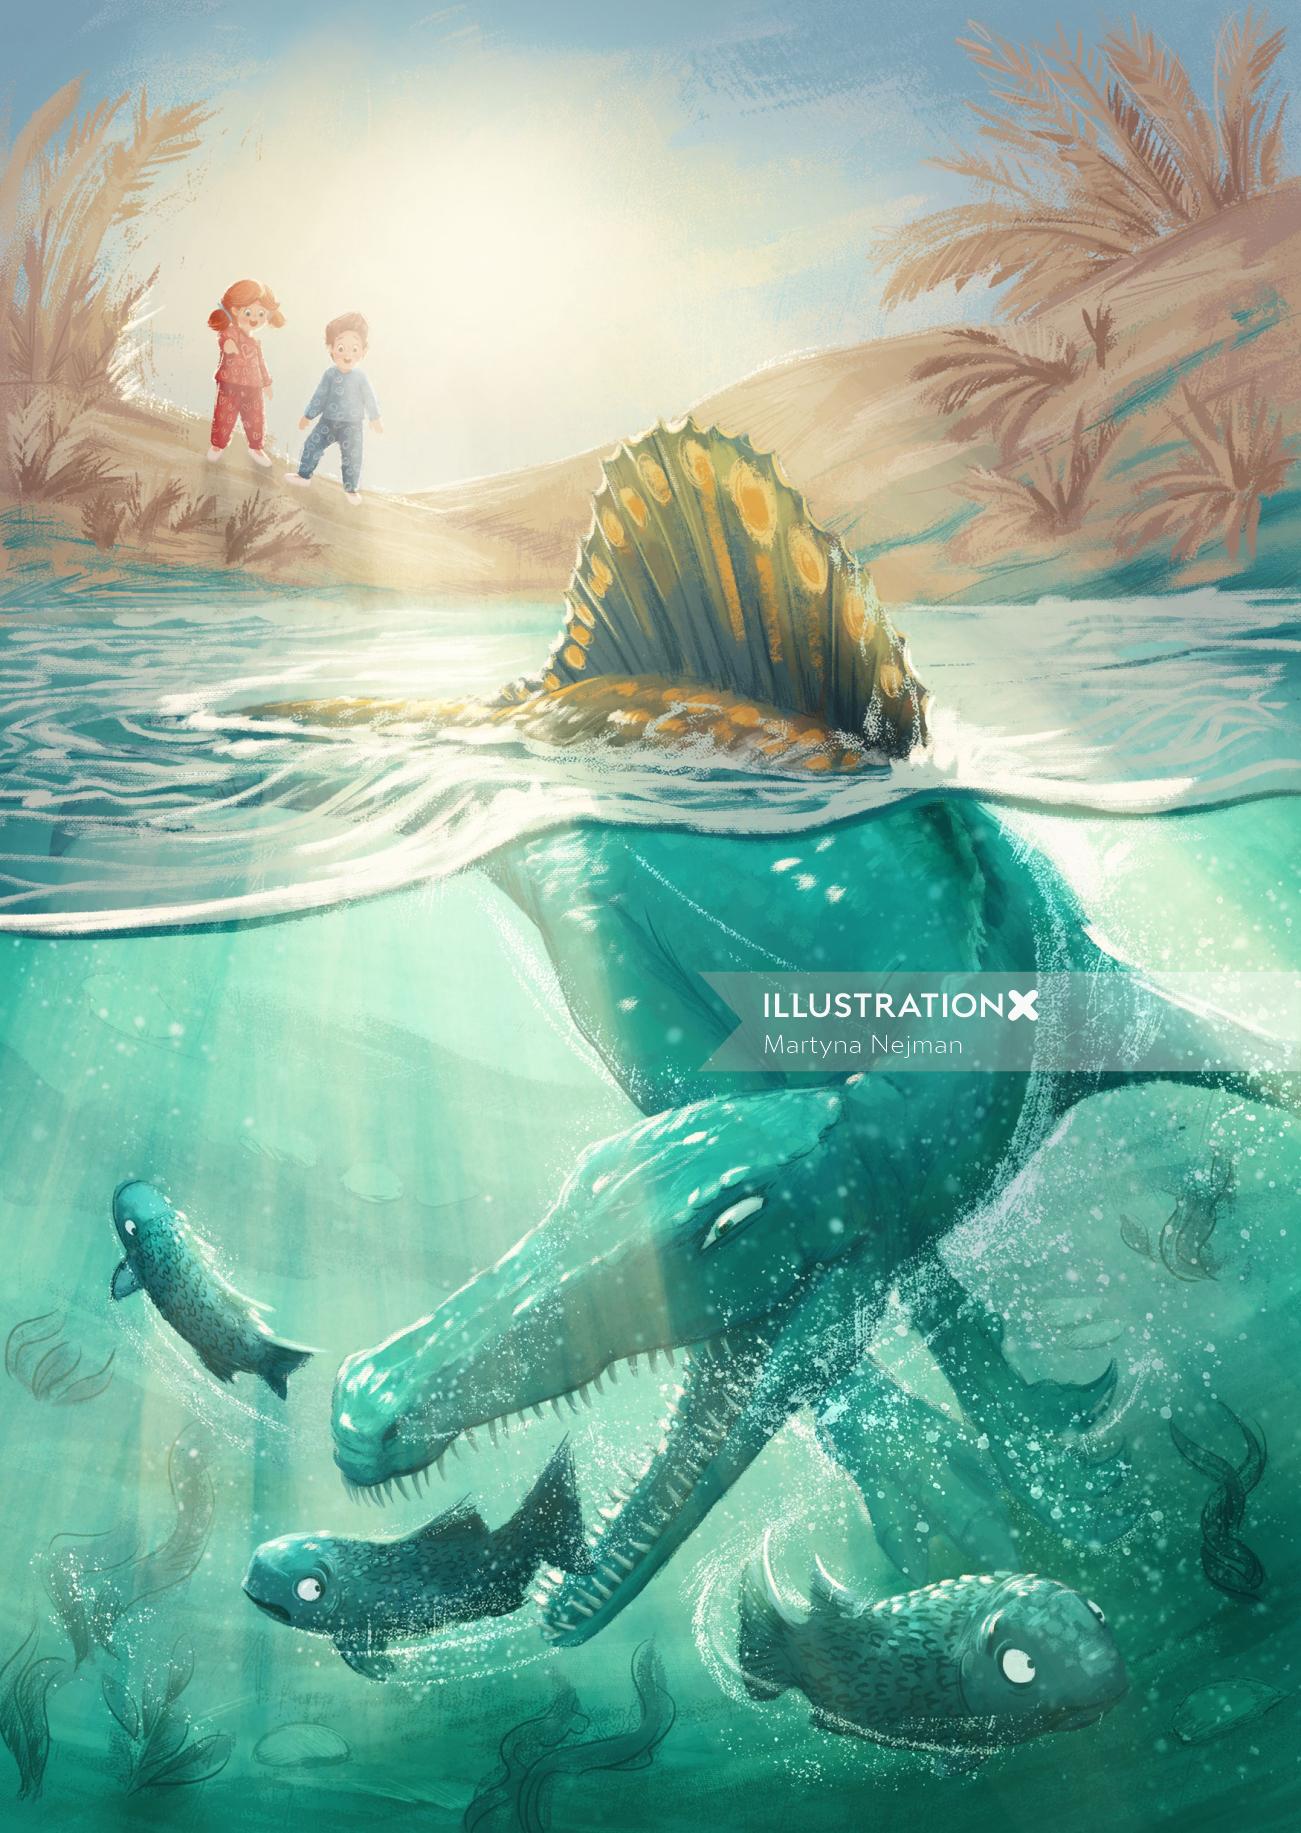 W krainie dinozaurów (In the land of dinosaurus) book illustration